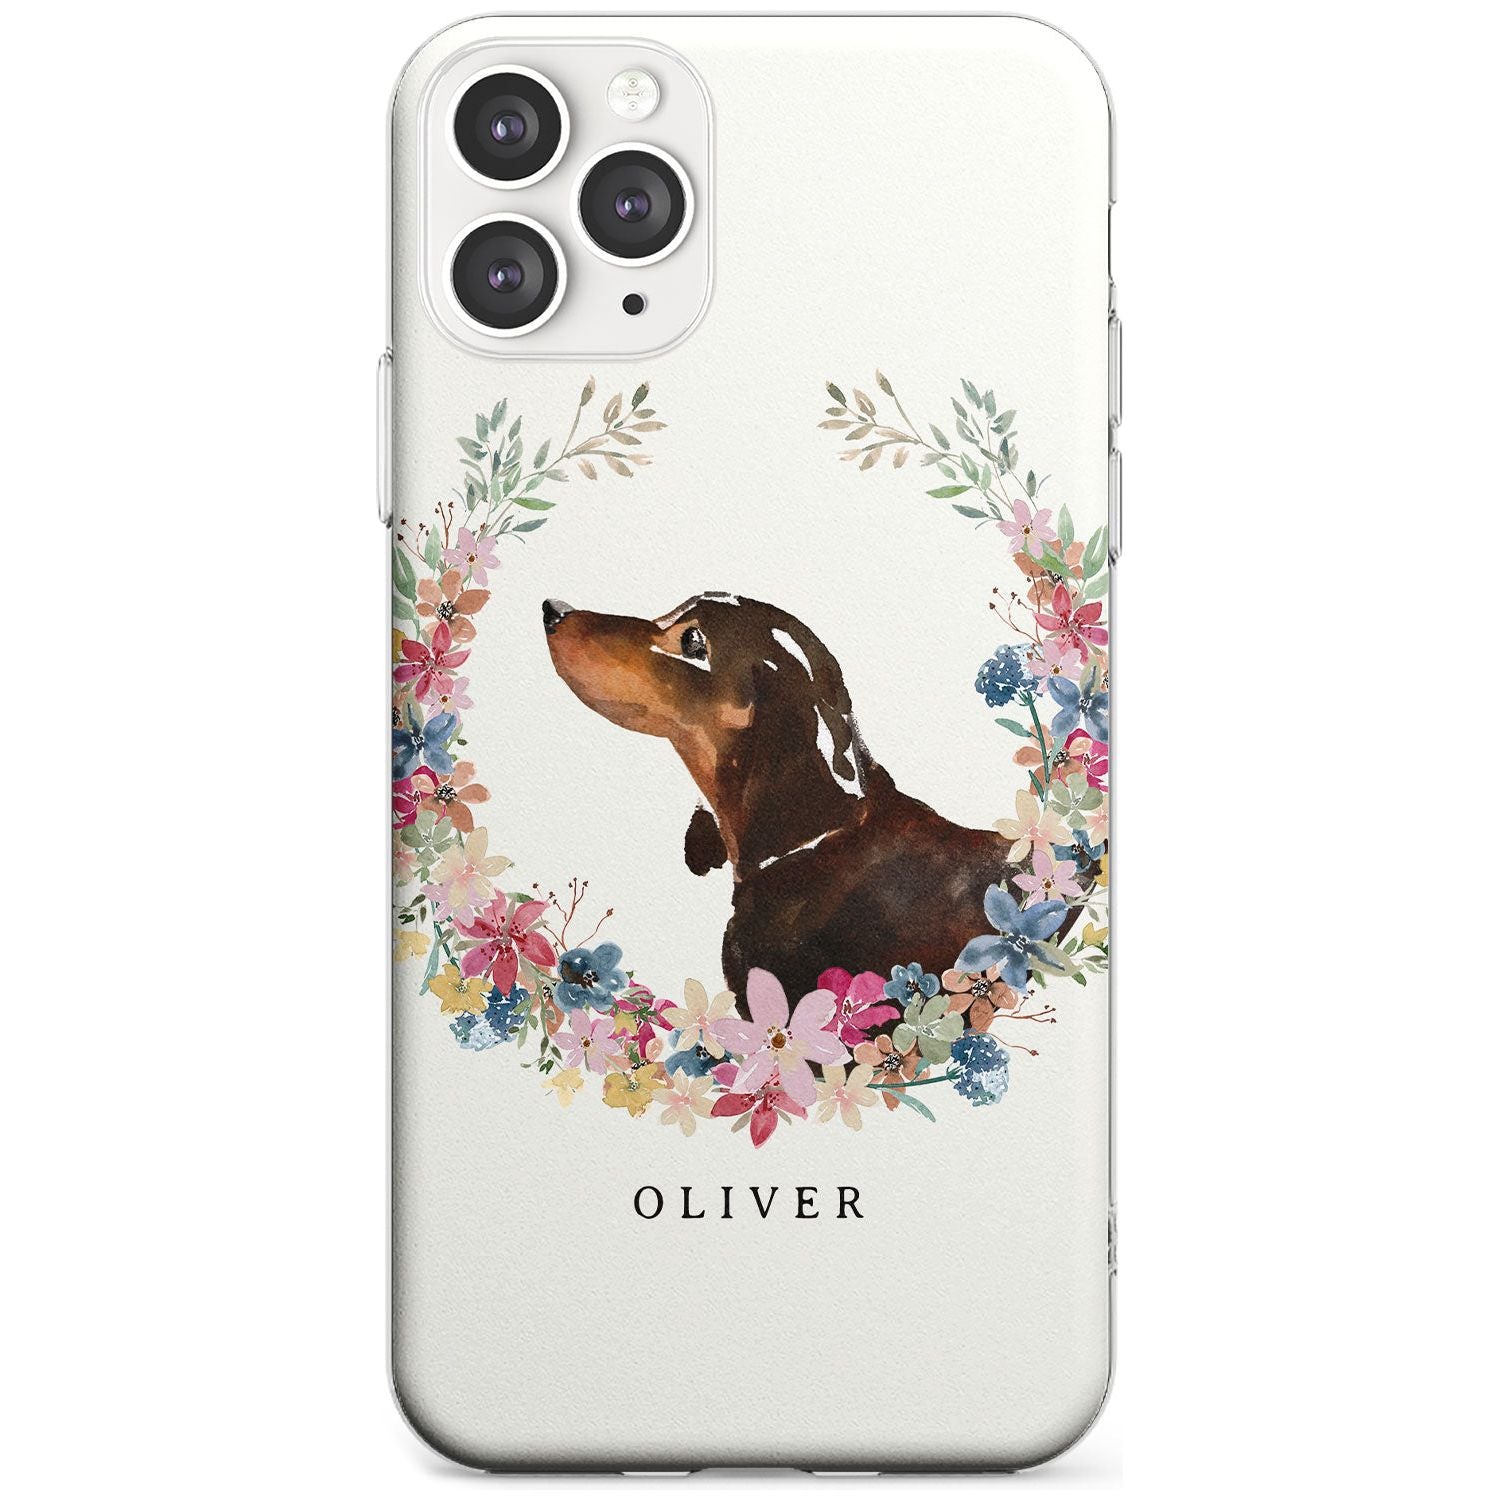 Black & Tan Dachshund - Watercolour Dog Portrait Slim TPU Phone Case for iPhone 11 Pro Max